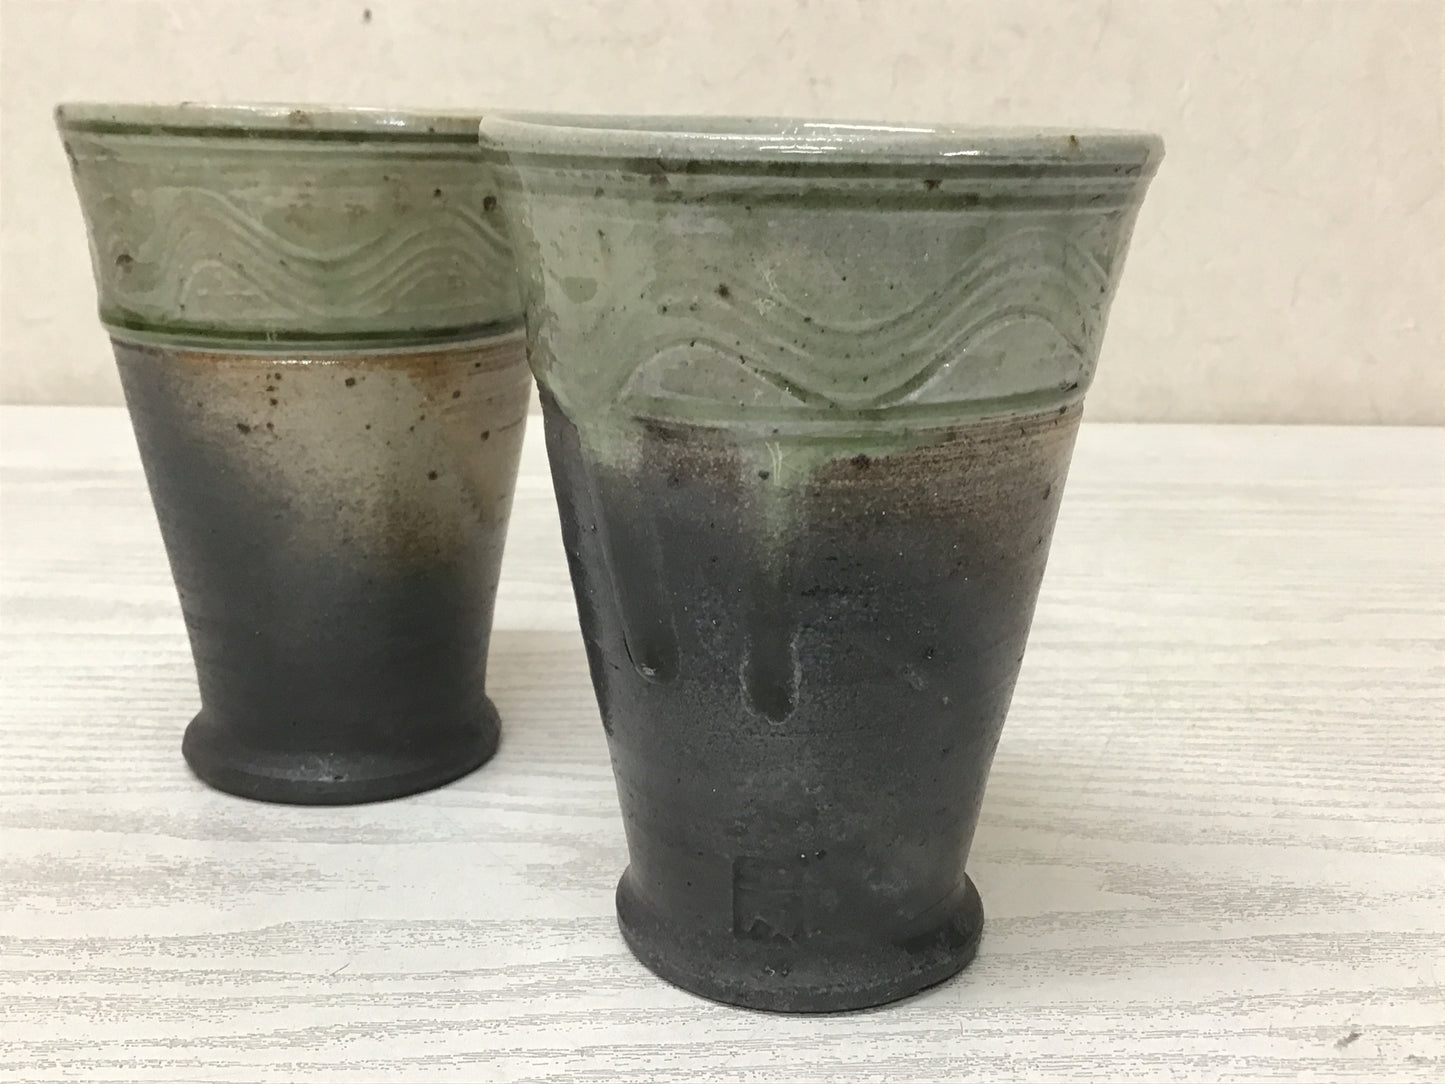 Y2728 CUP Mino-ware Beer Mug signed box glassware Japanese antique tableware